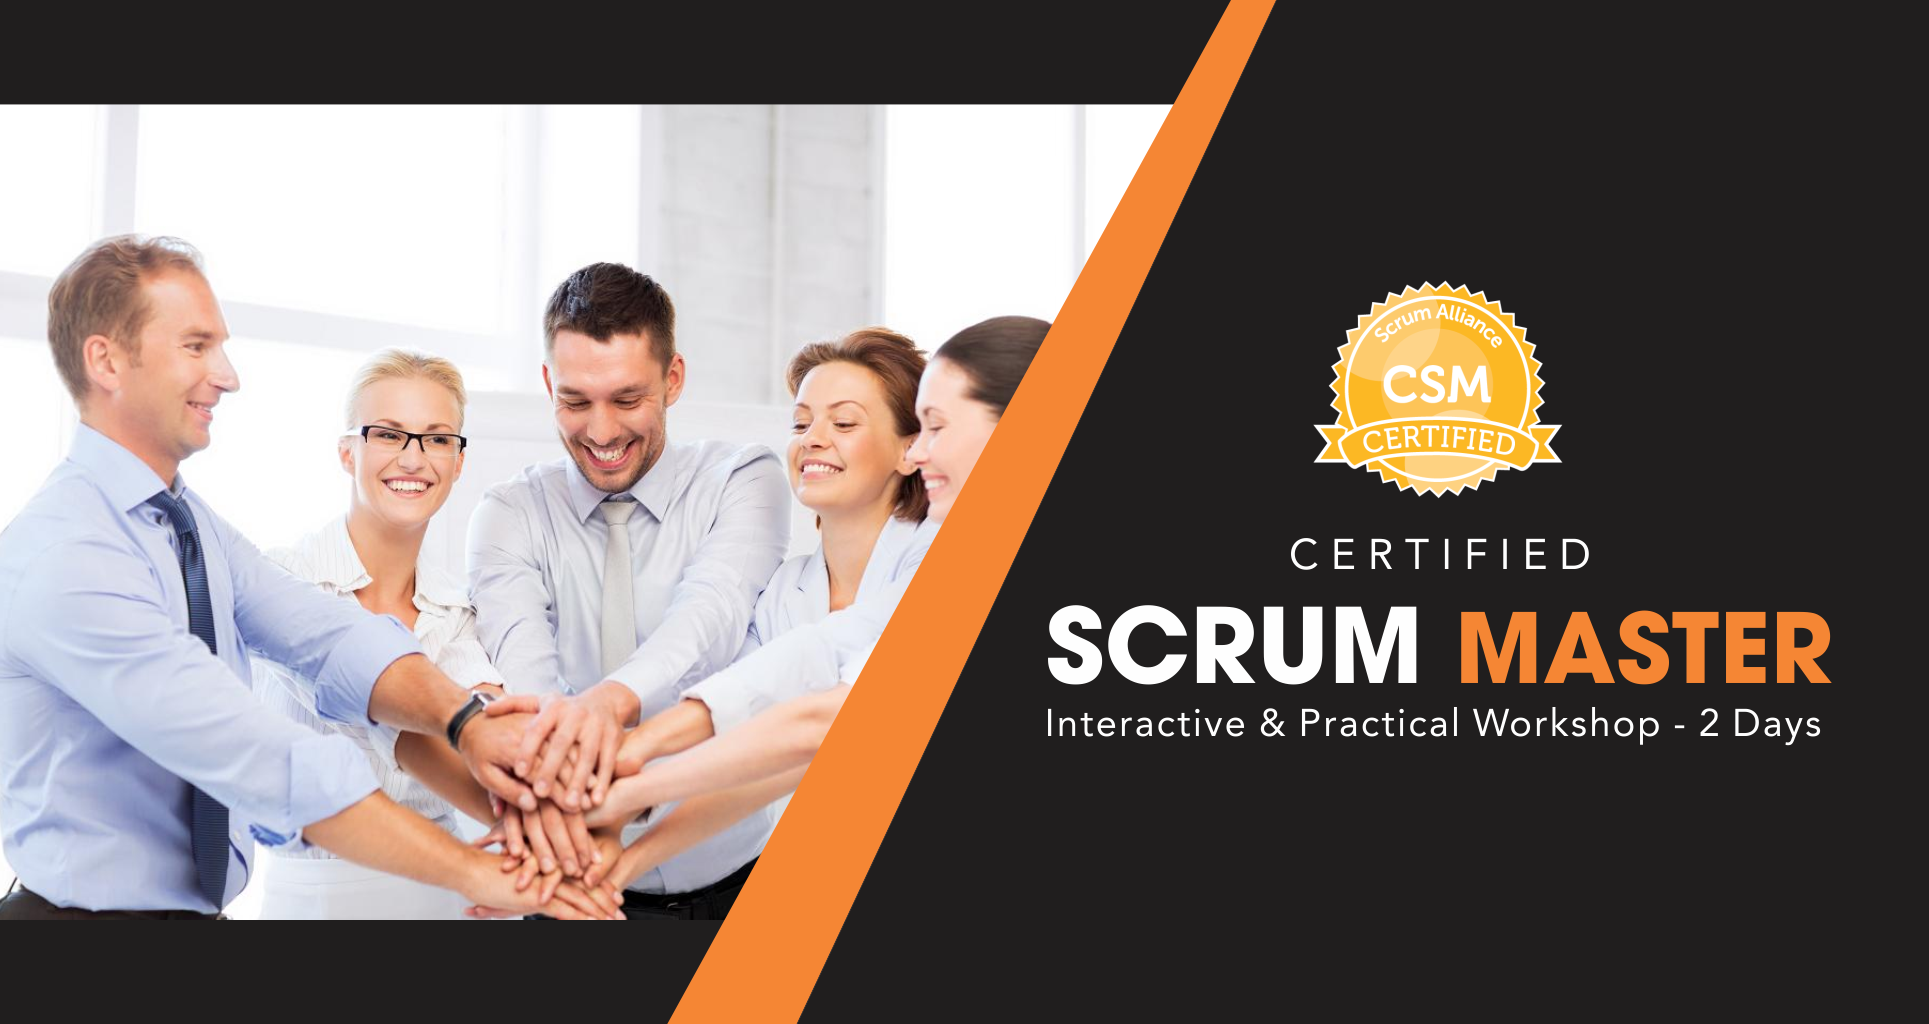 CSM (Certified Scrum Master) certification Training In Houston, TX